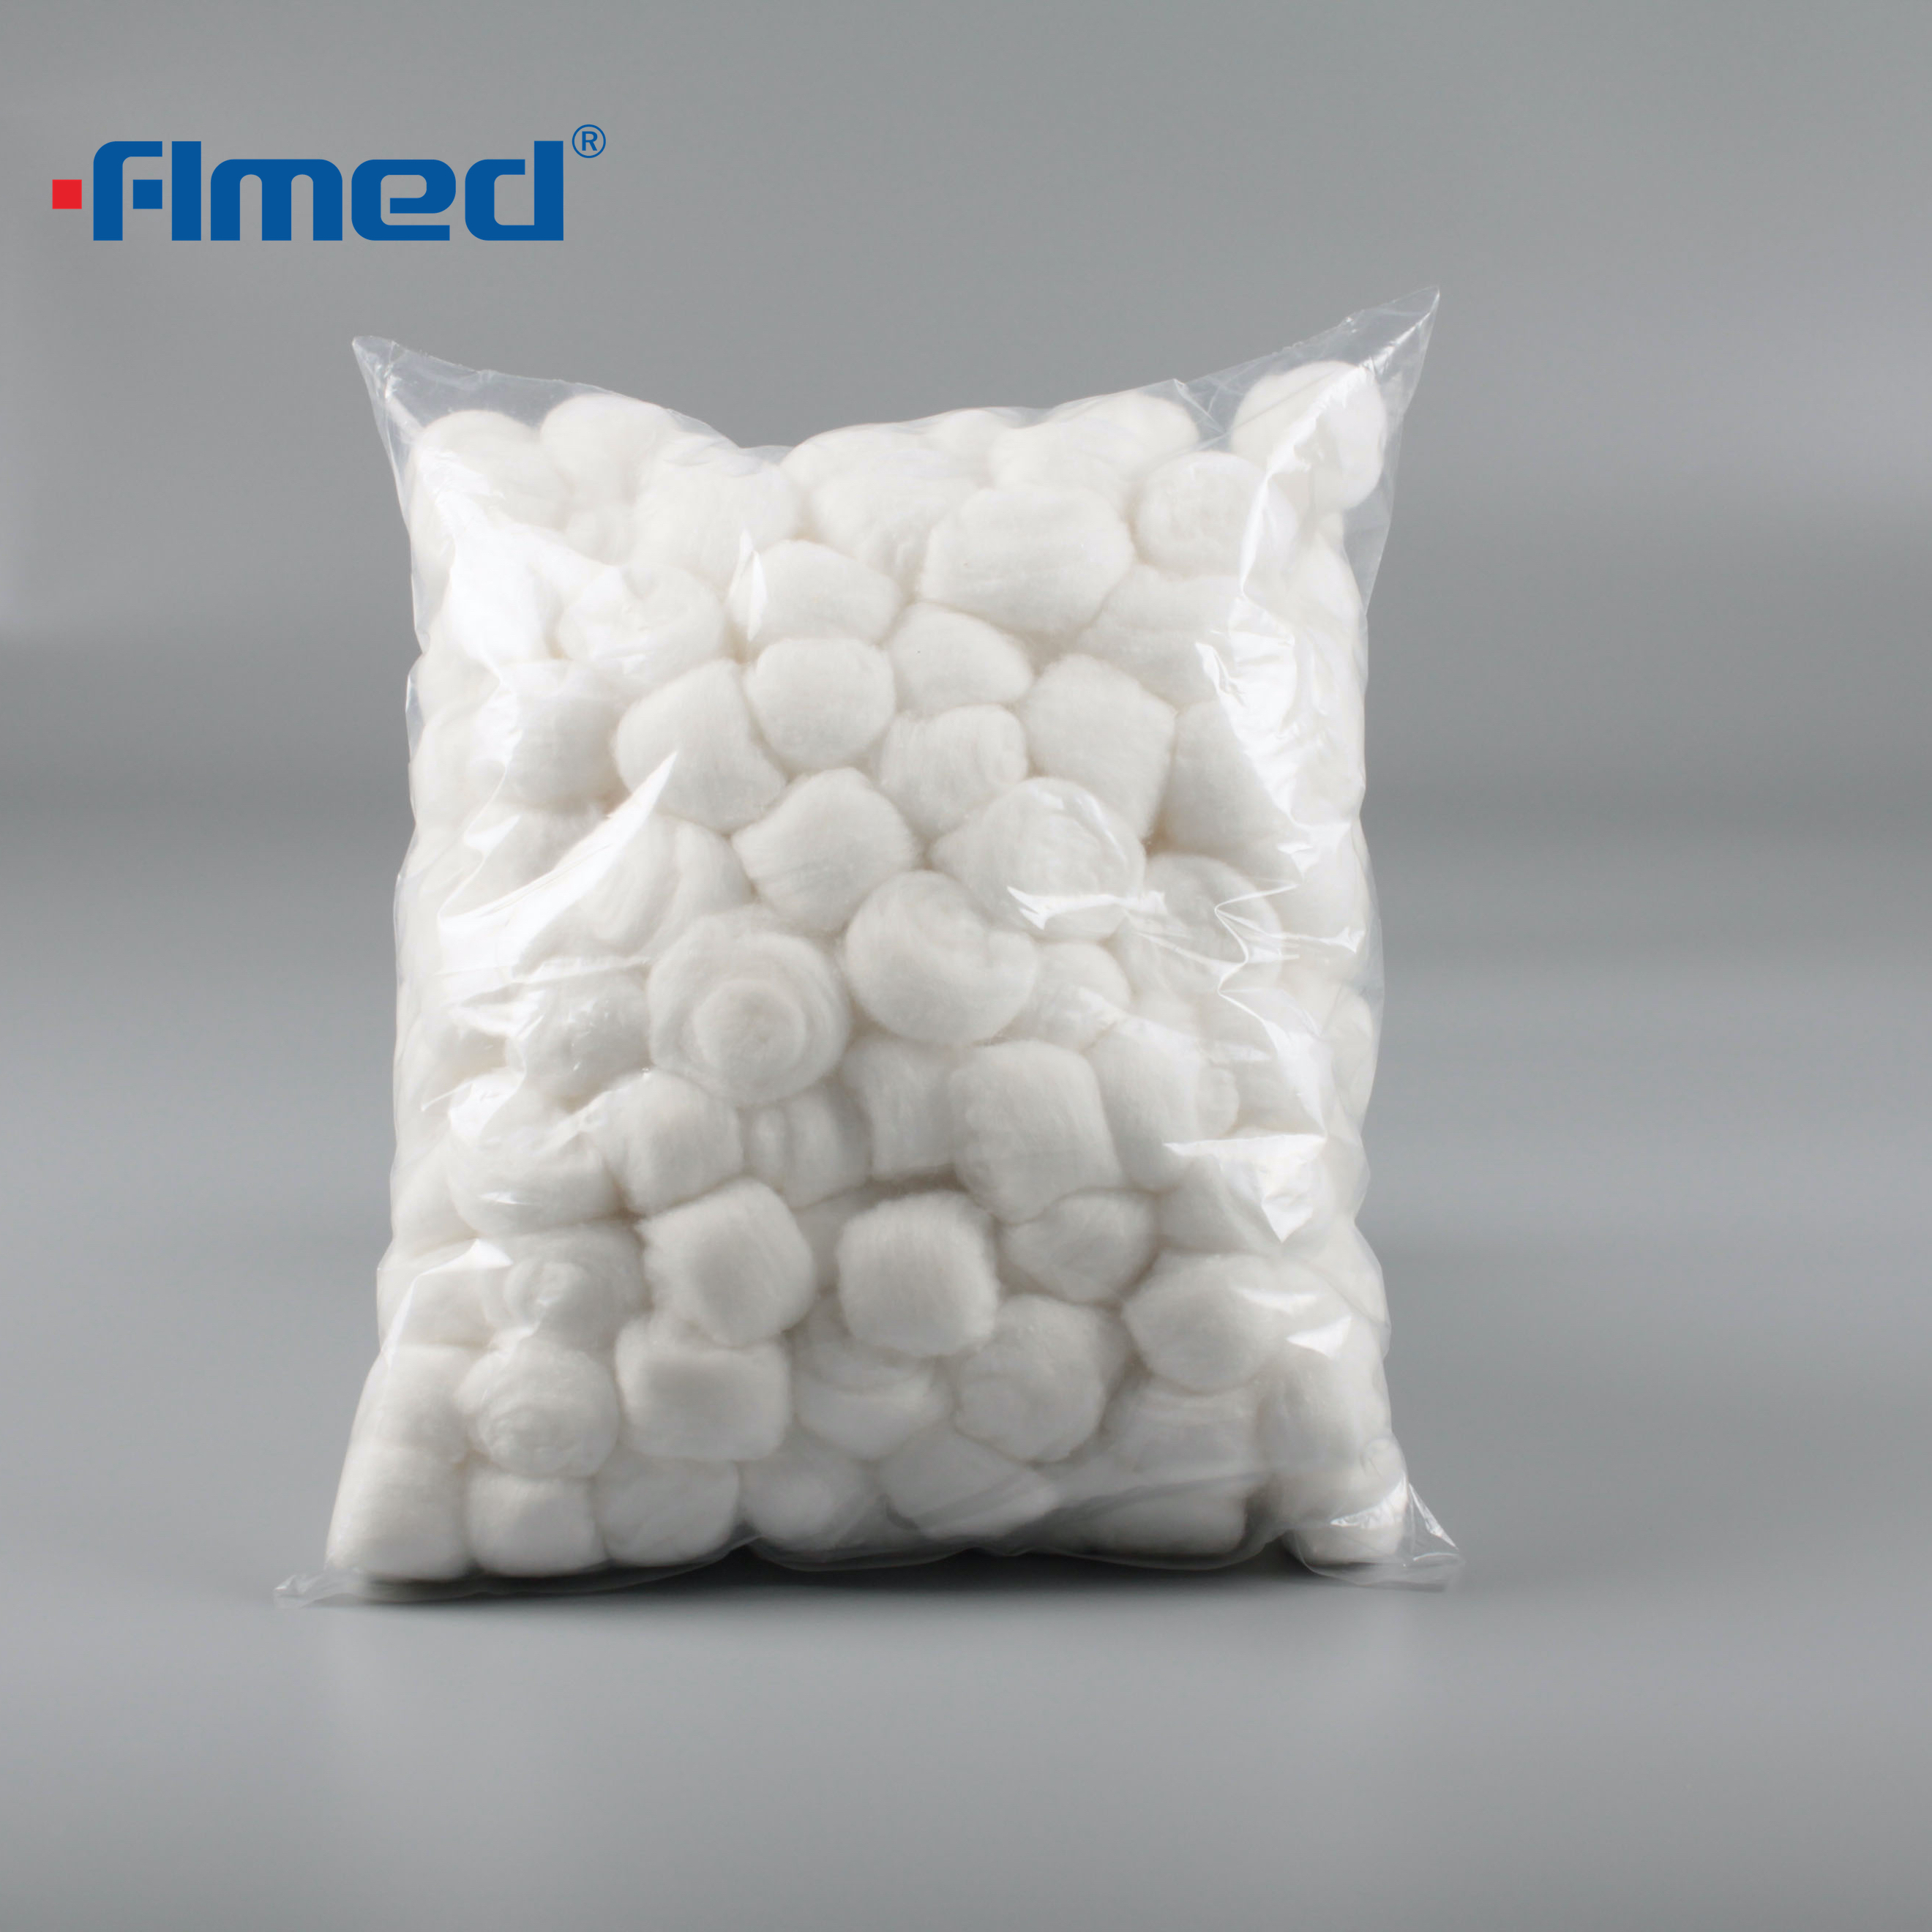 High Quality Small Cotton Balls Medical 100% Cotton - China Cotton Balls,  Sterile Cotton Balls